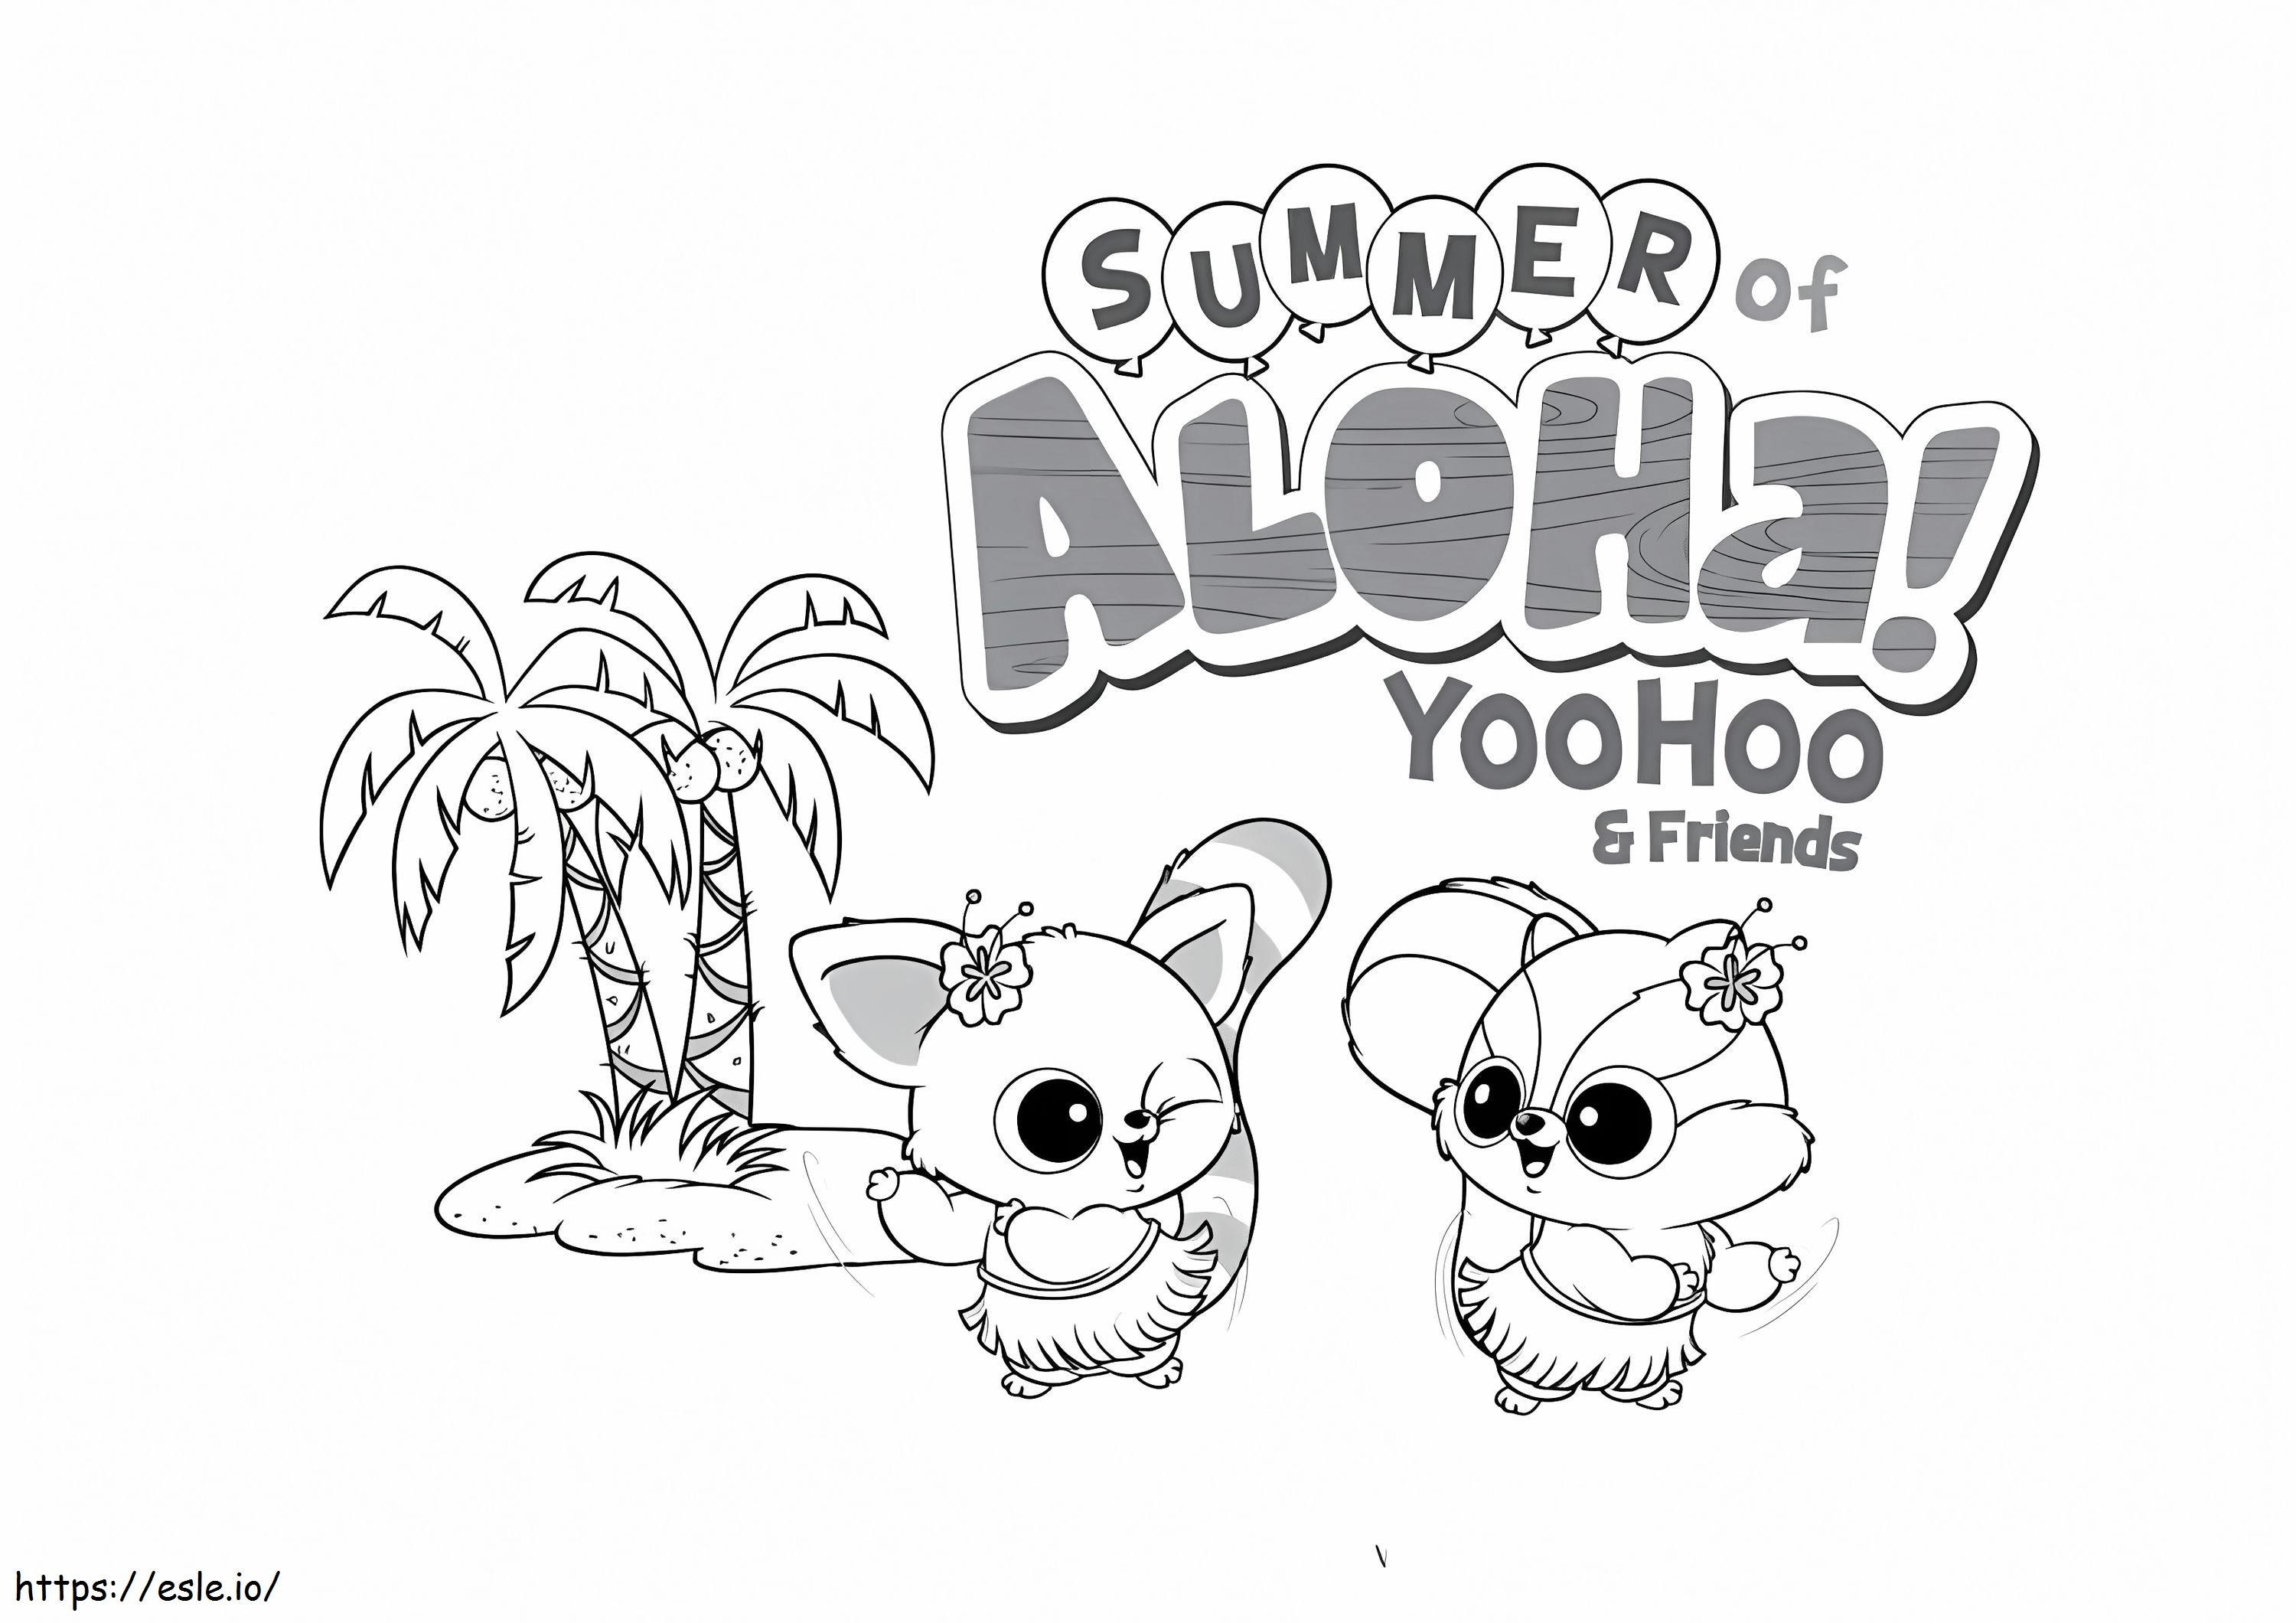 YooHoo And Friends Summer Aloha coloring page